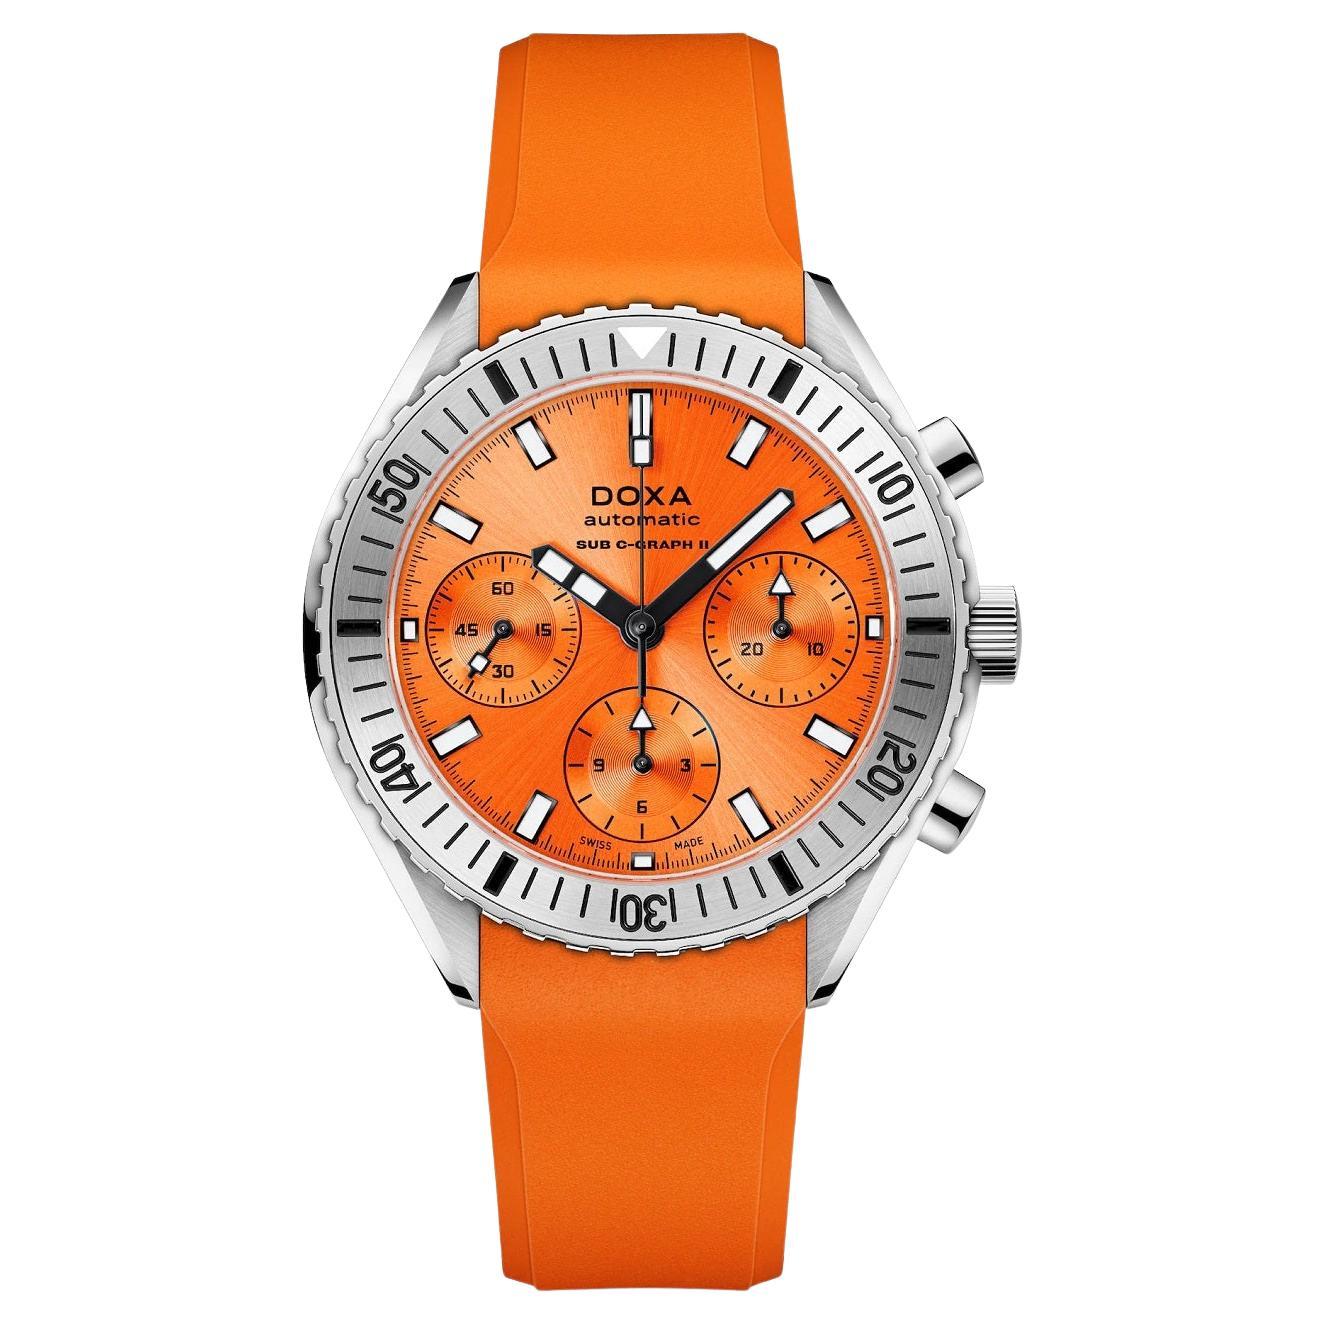 Doxa Sub 200 C-Graph II Professional Orange Dial Men's Watch 797.10.351.21 For Sale